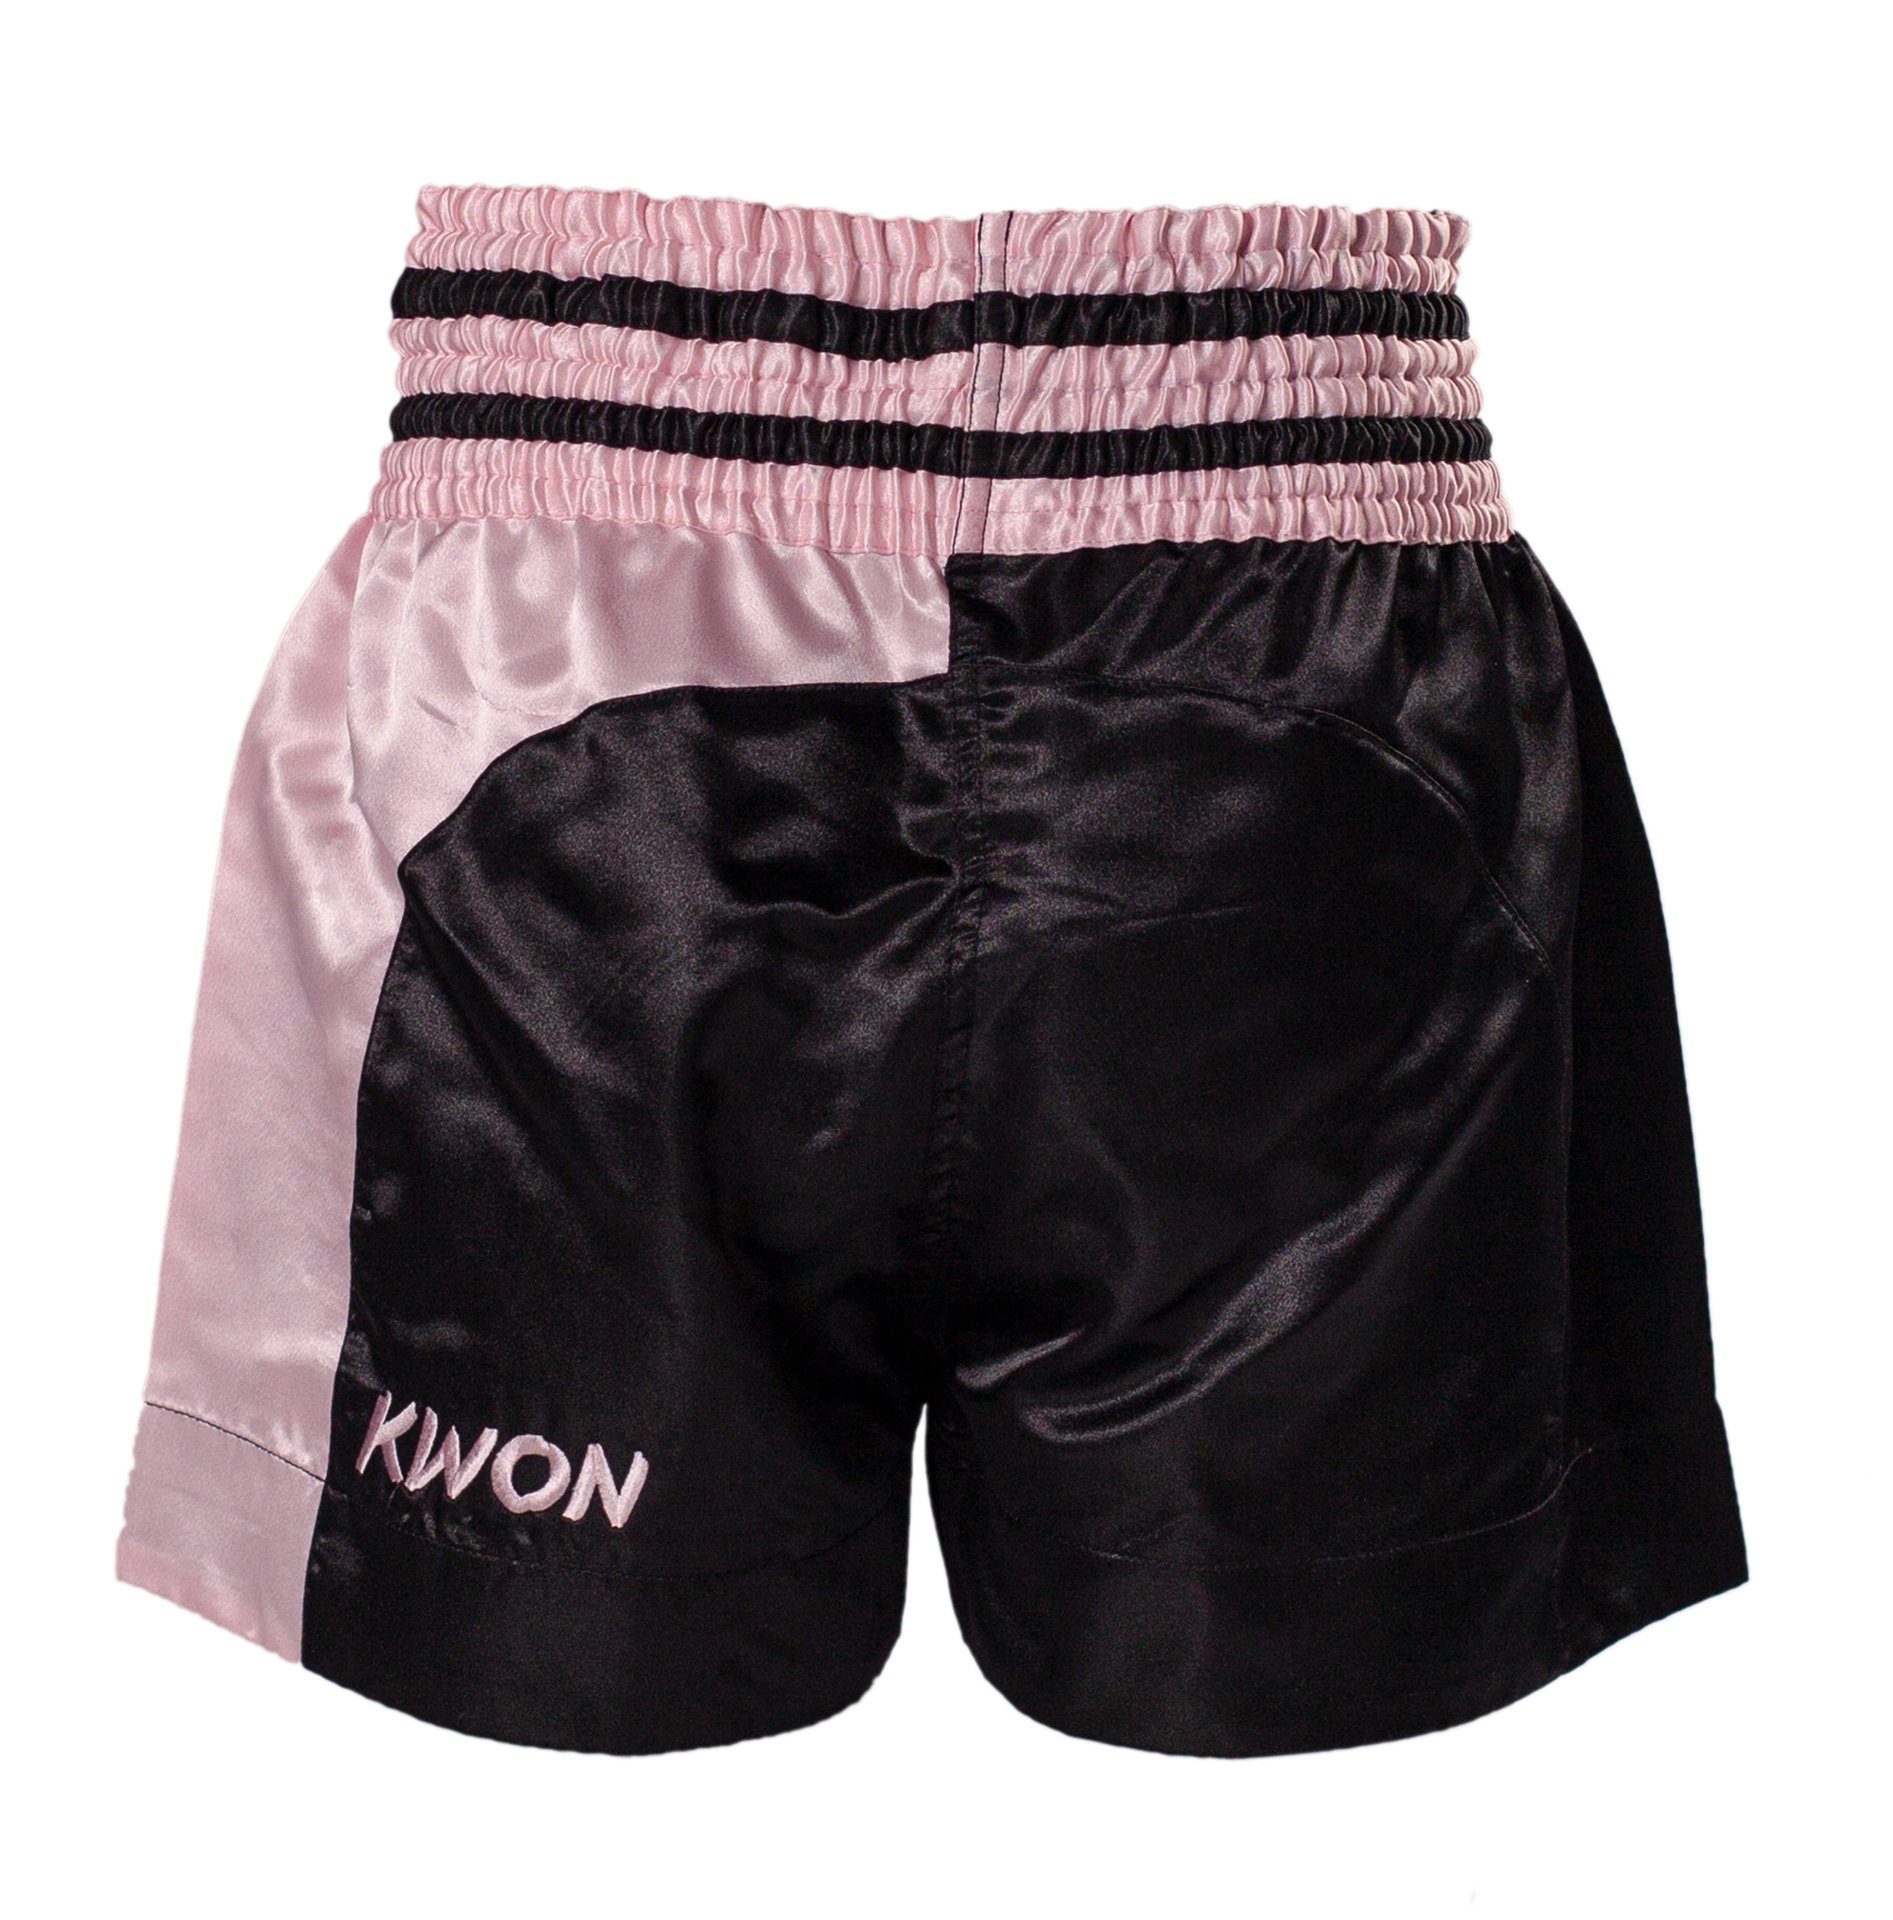 Look) Muay Kickboxhose (Edler rosa Sporthose Damen Box Schnitt, MMA kurz Thai Shorts pink KWON traditioneller Thaiboxhose Sterne